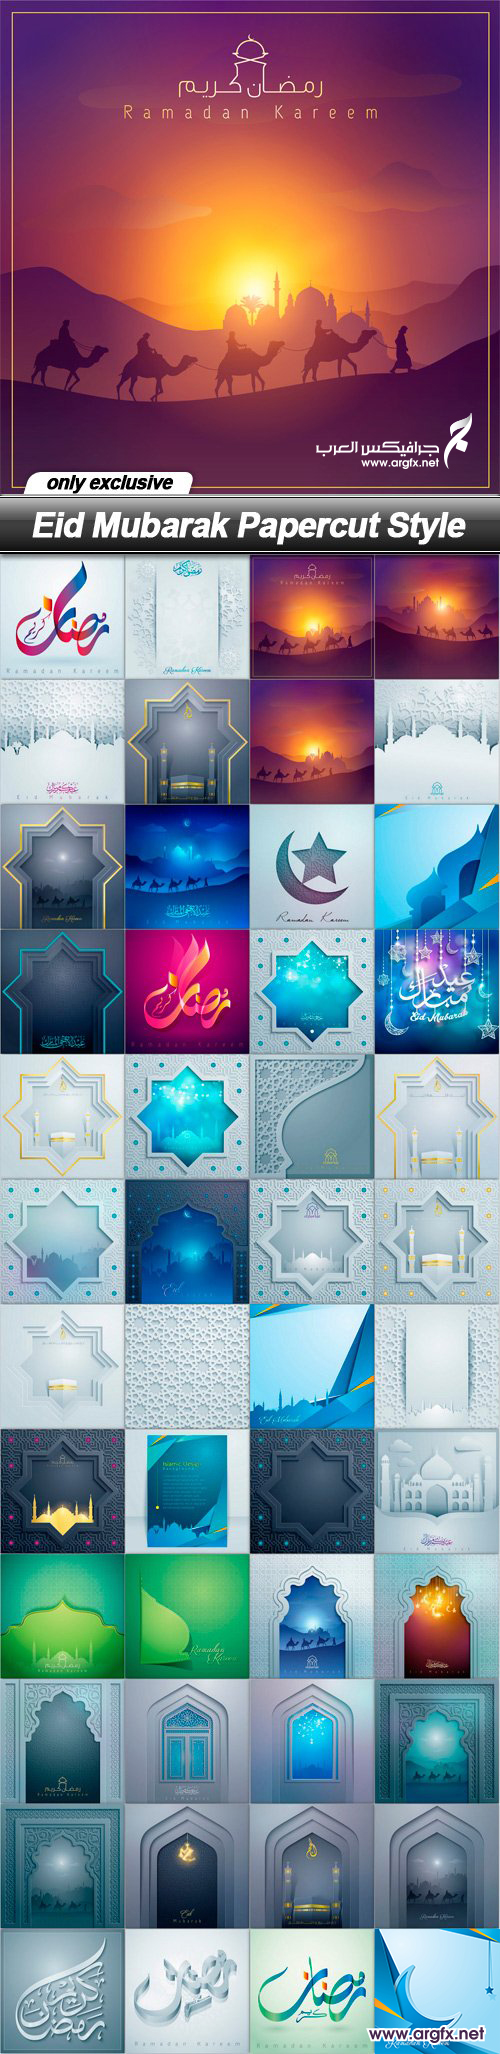 Eid Mubarak Papercut Style - 48 EPS